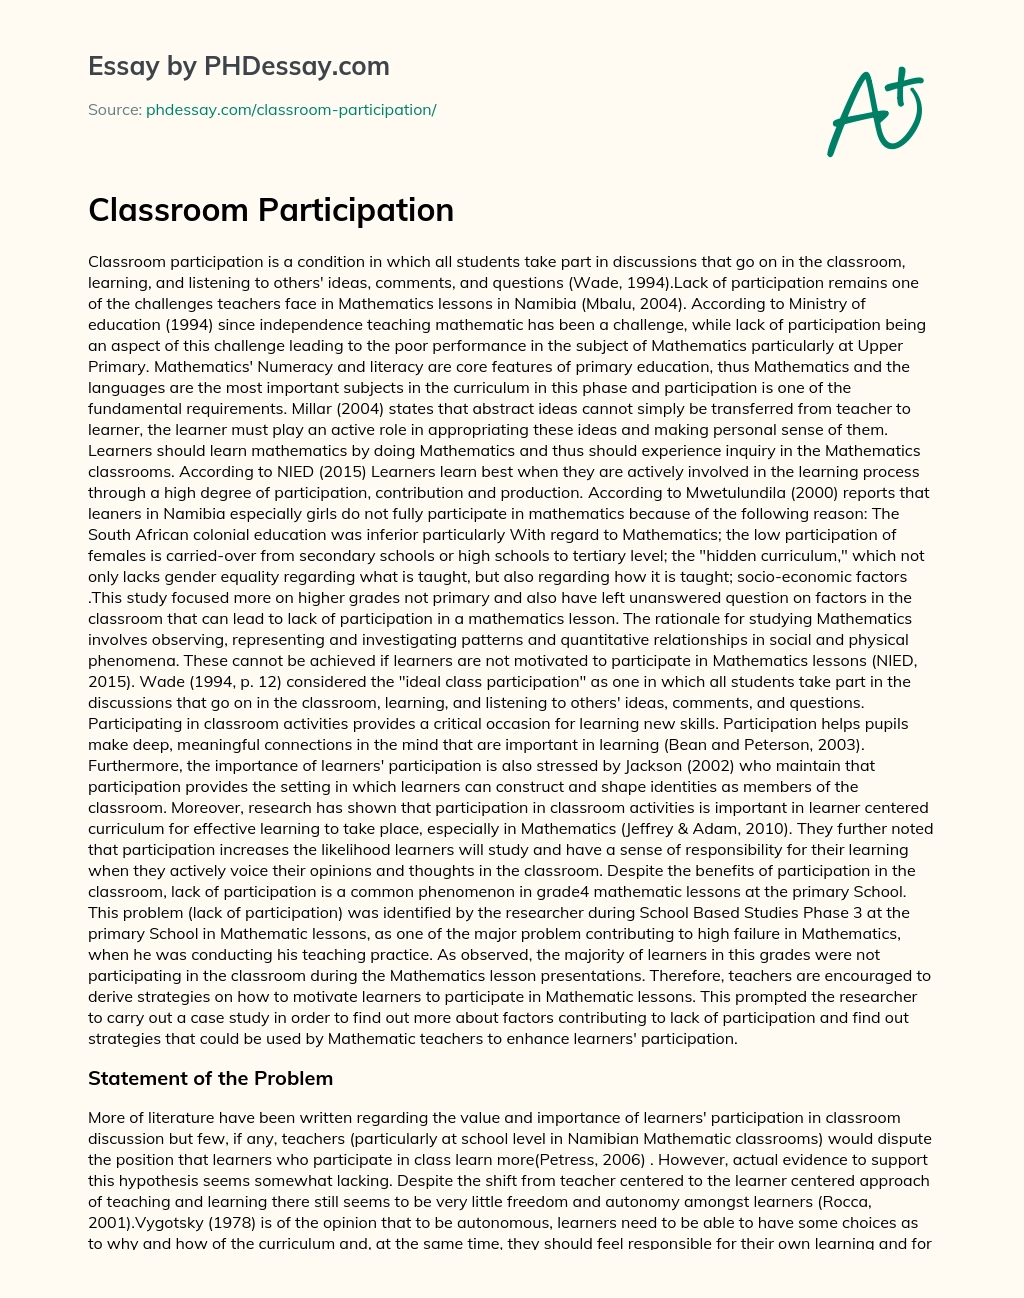 class participation self evaluation essay